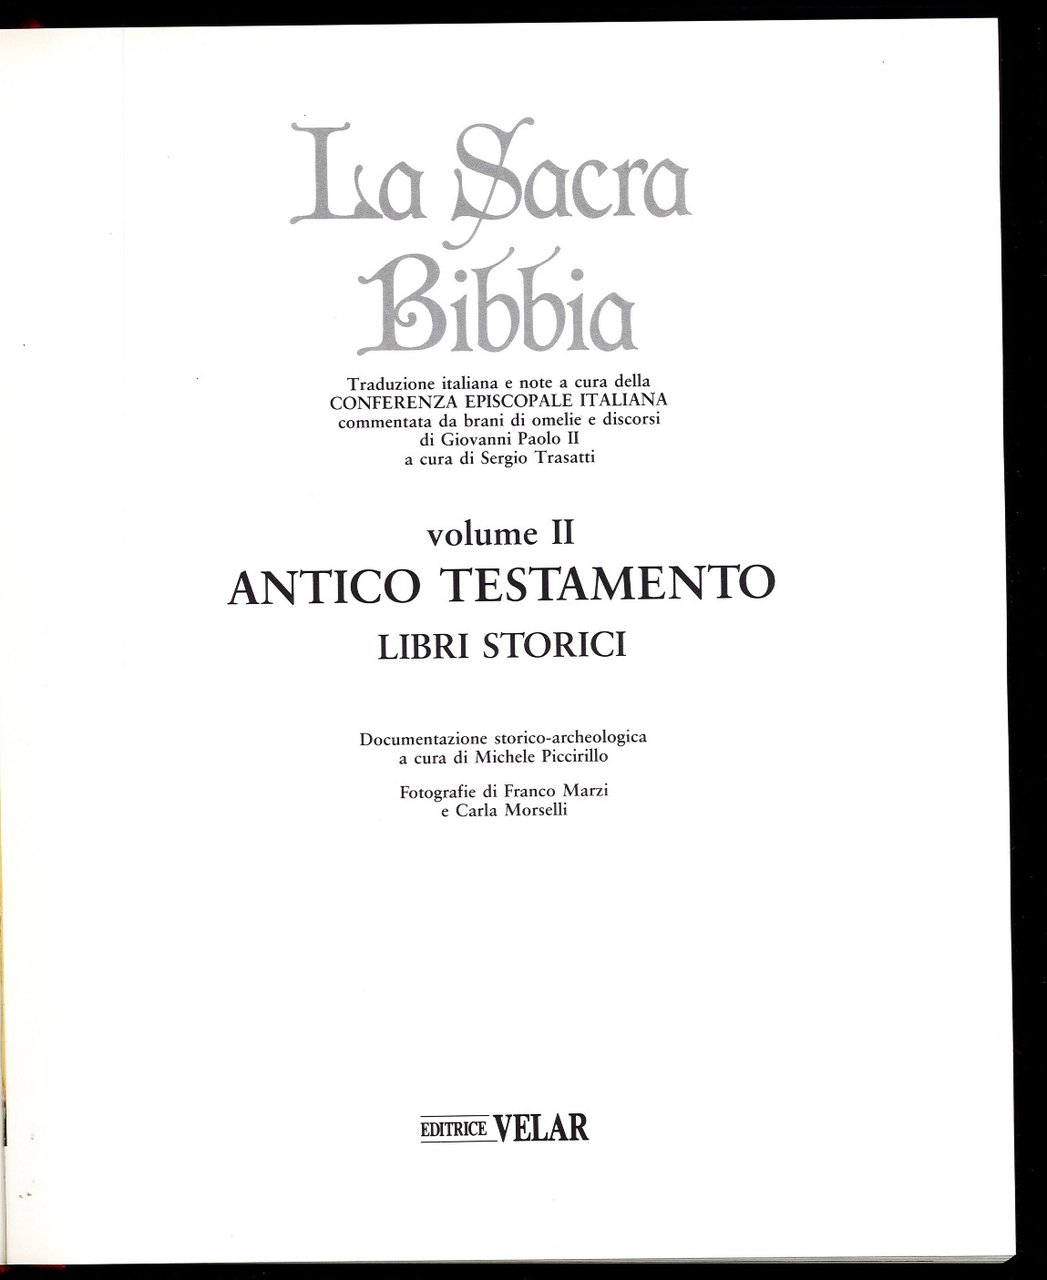 La Sacra Bibbia volume II. Antico testamento - Libri storici